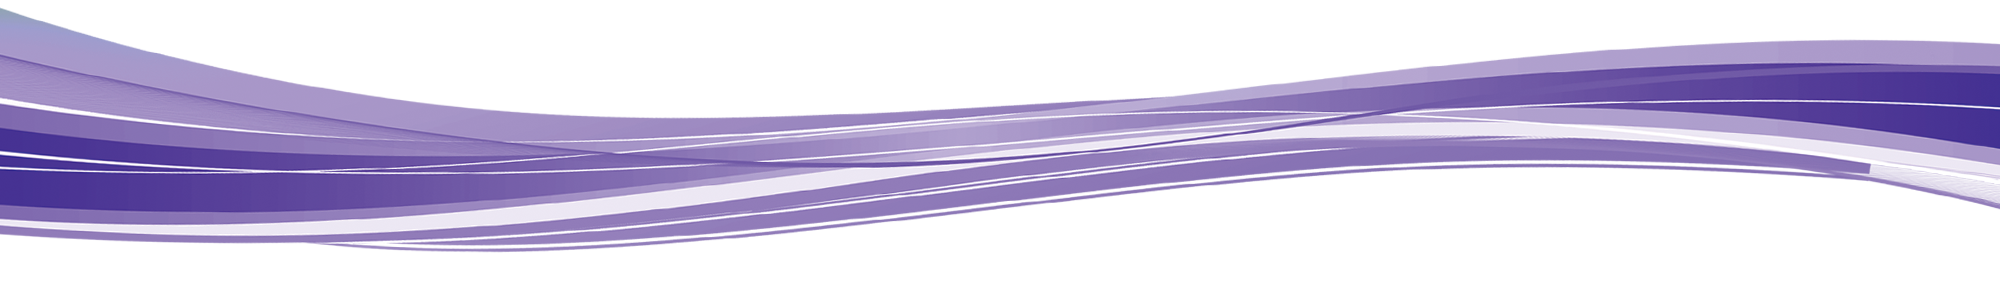 Latar belakang Transparan gelombang ungu